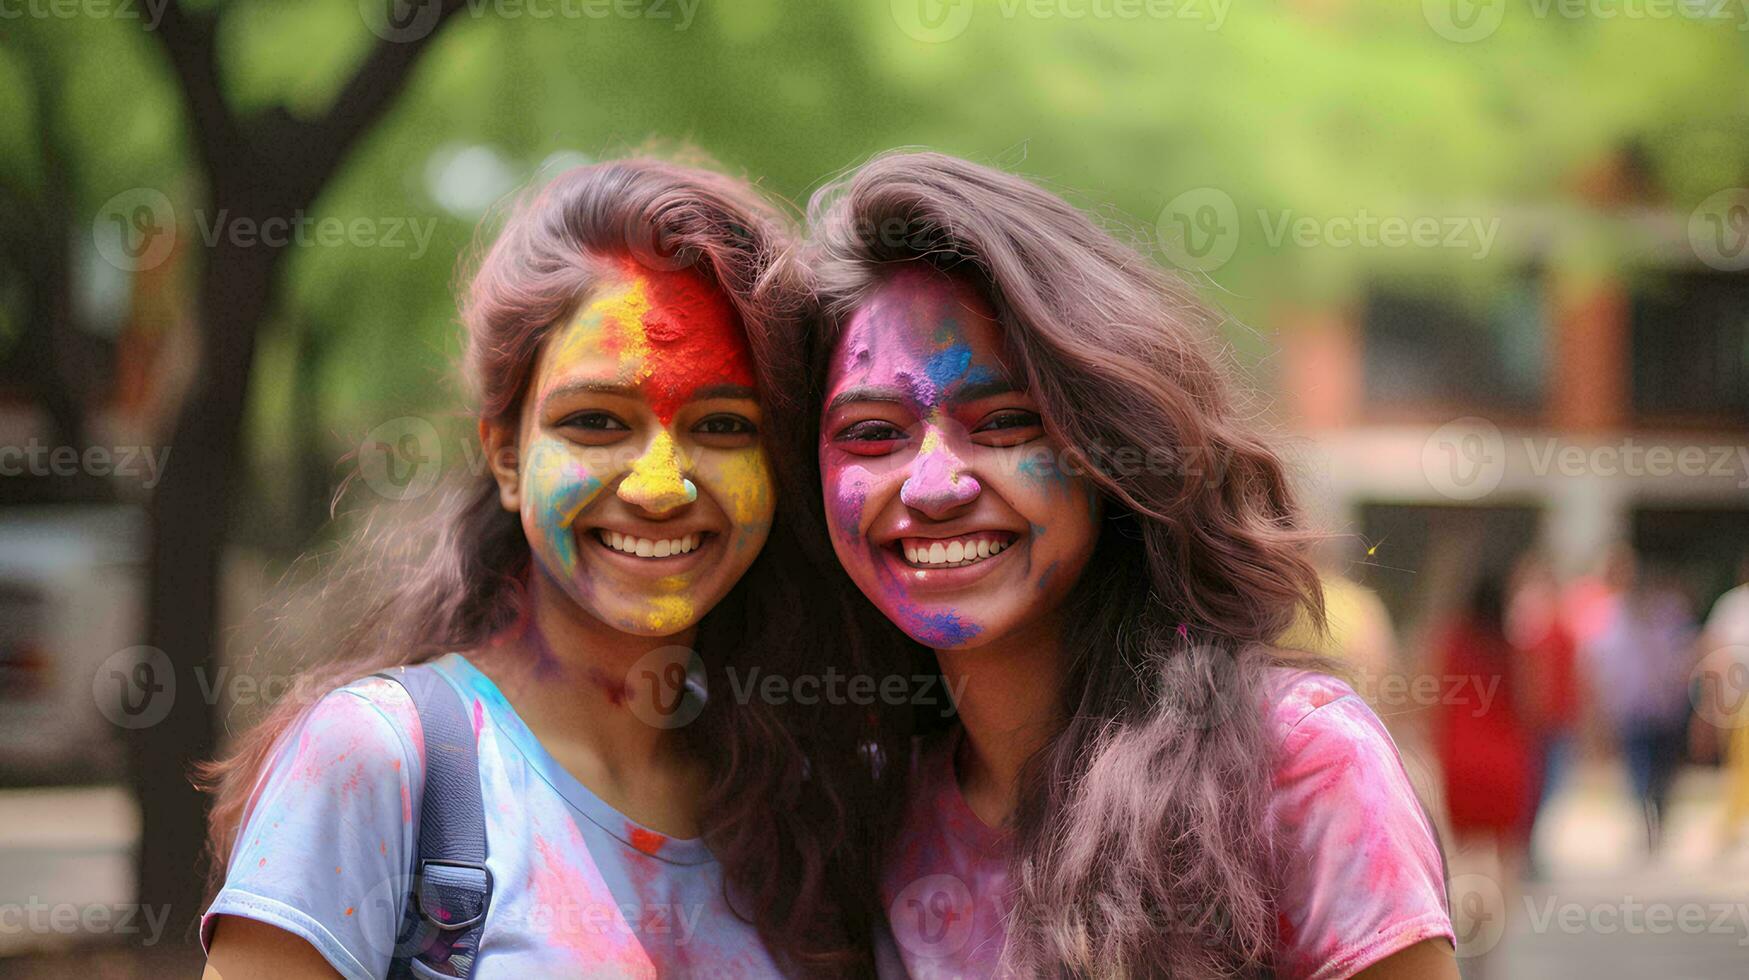 People celebrating the Holi festival of colors photo